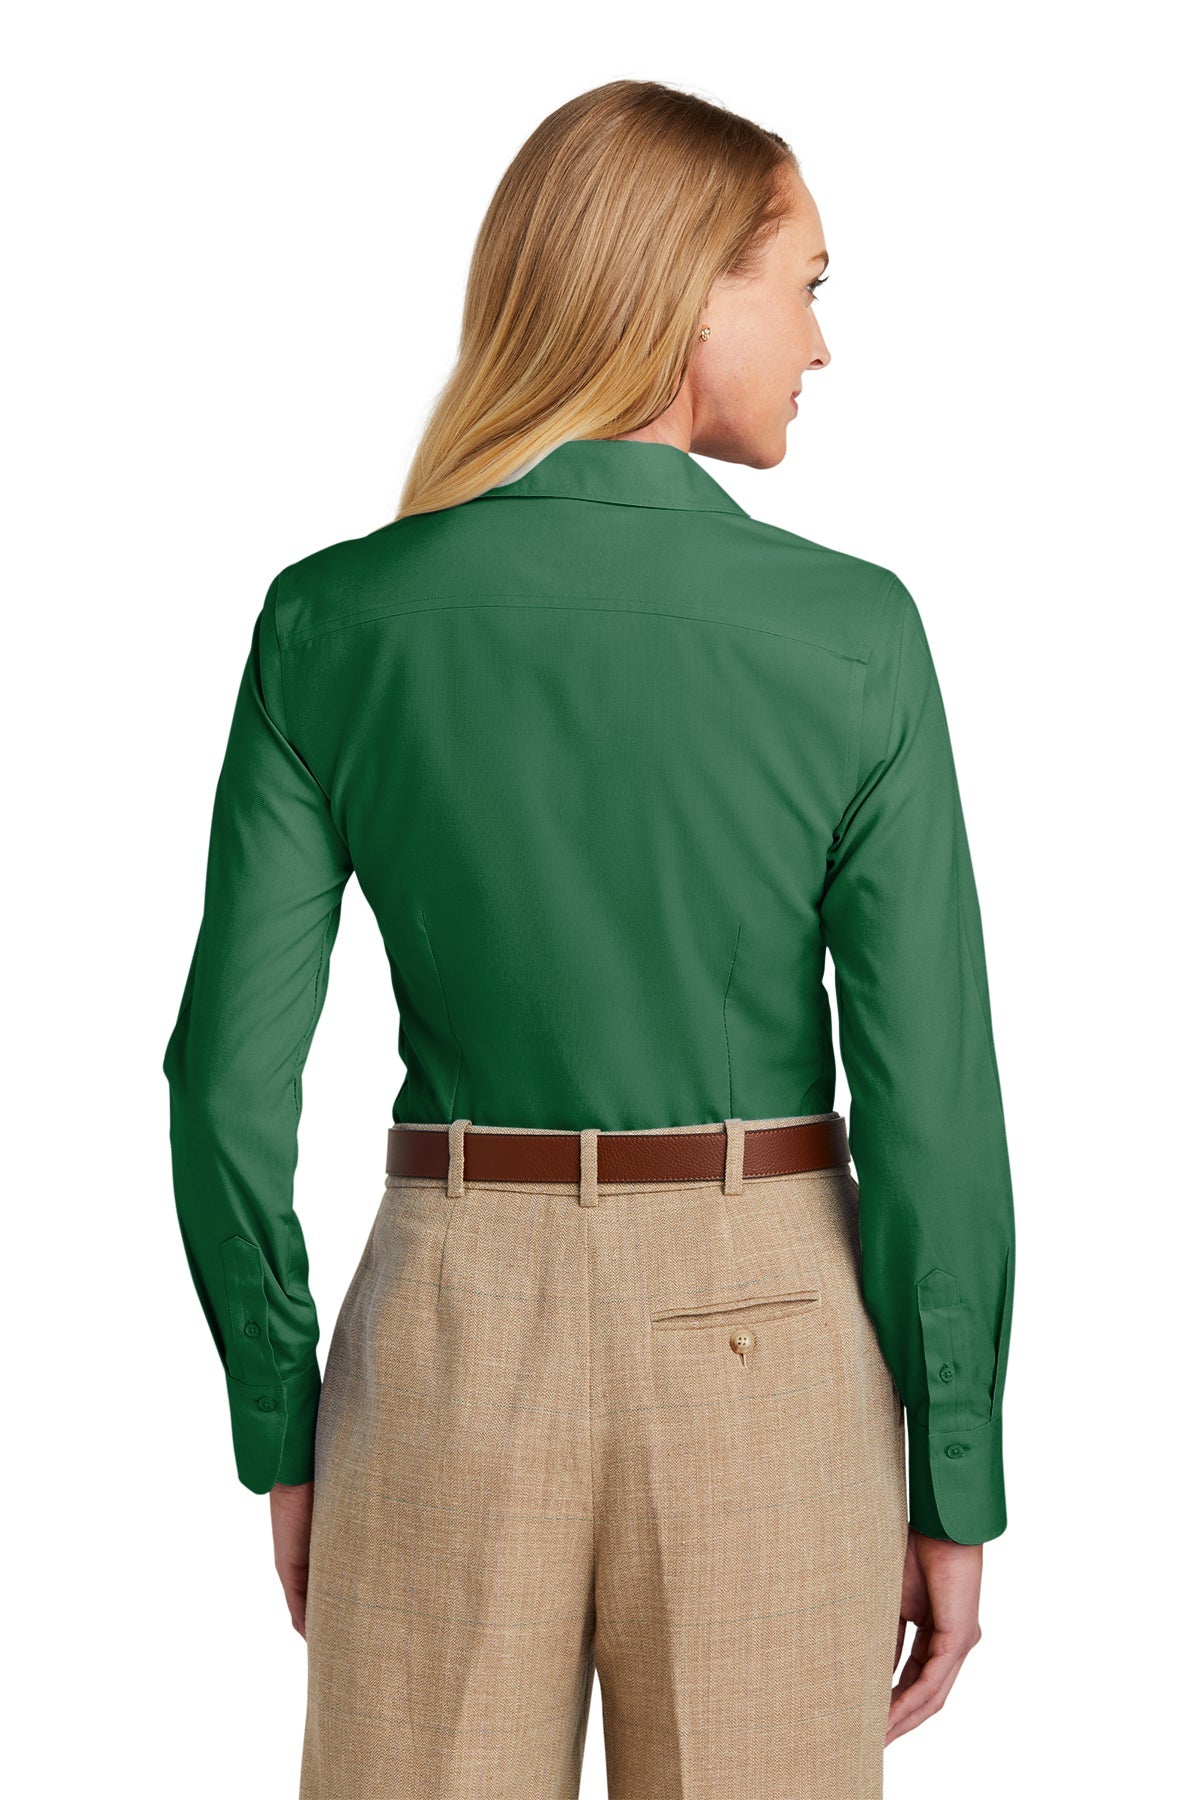 Brooks Brothers Womens Wrinkle-Free Stretch Nailhead Shirt, Club Green